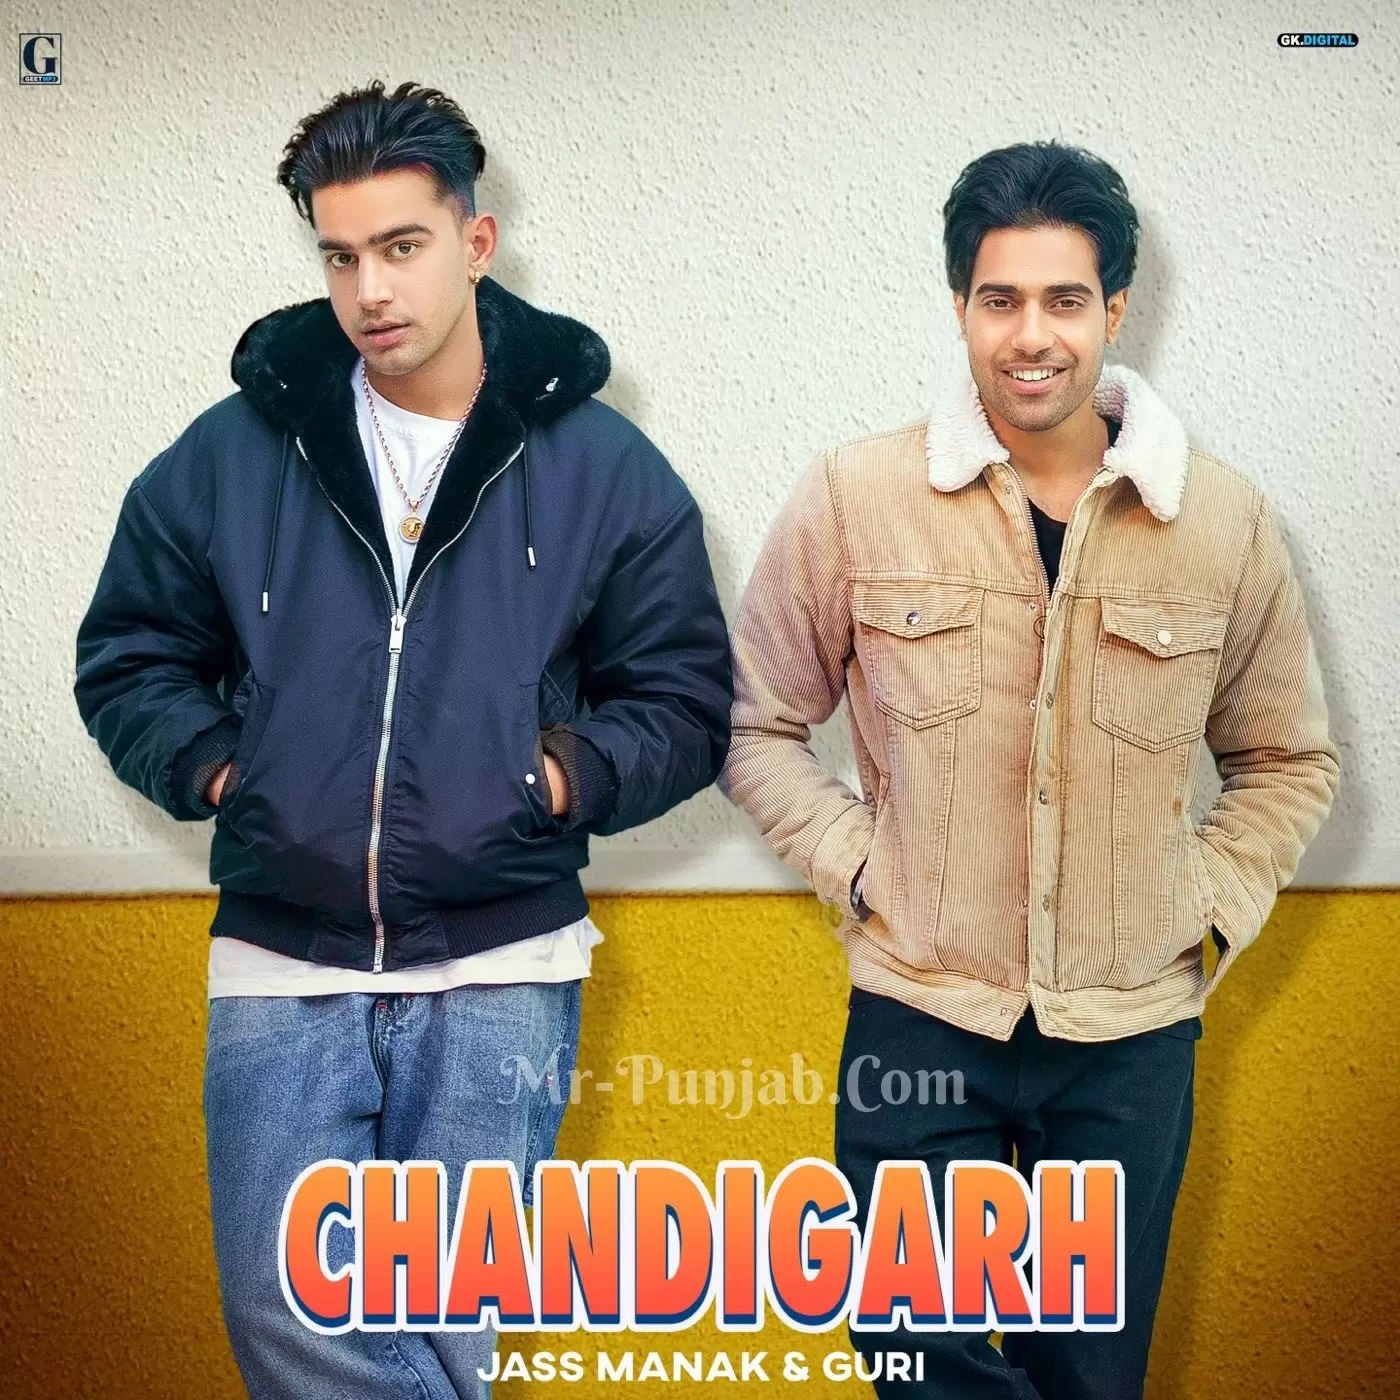 Chandigarh Jass Manak Mp3 Download Song - Mr-Punjab